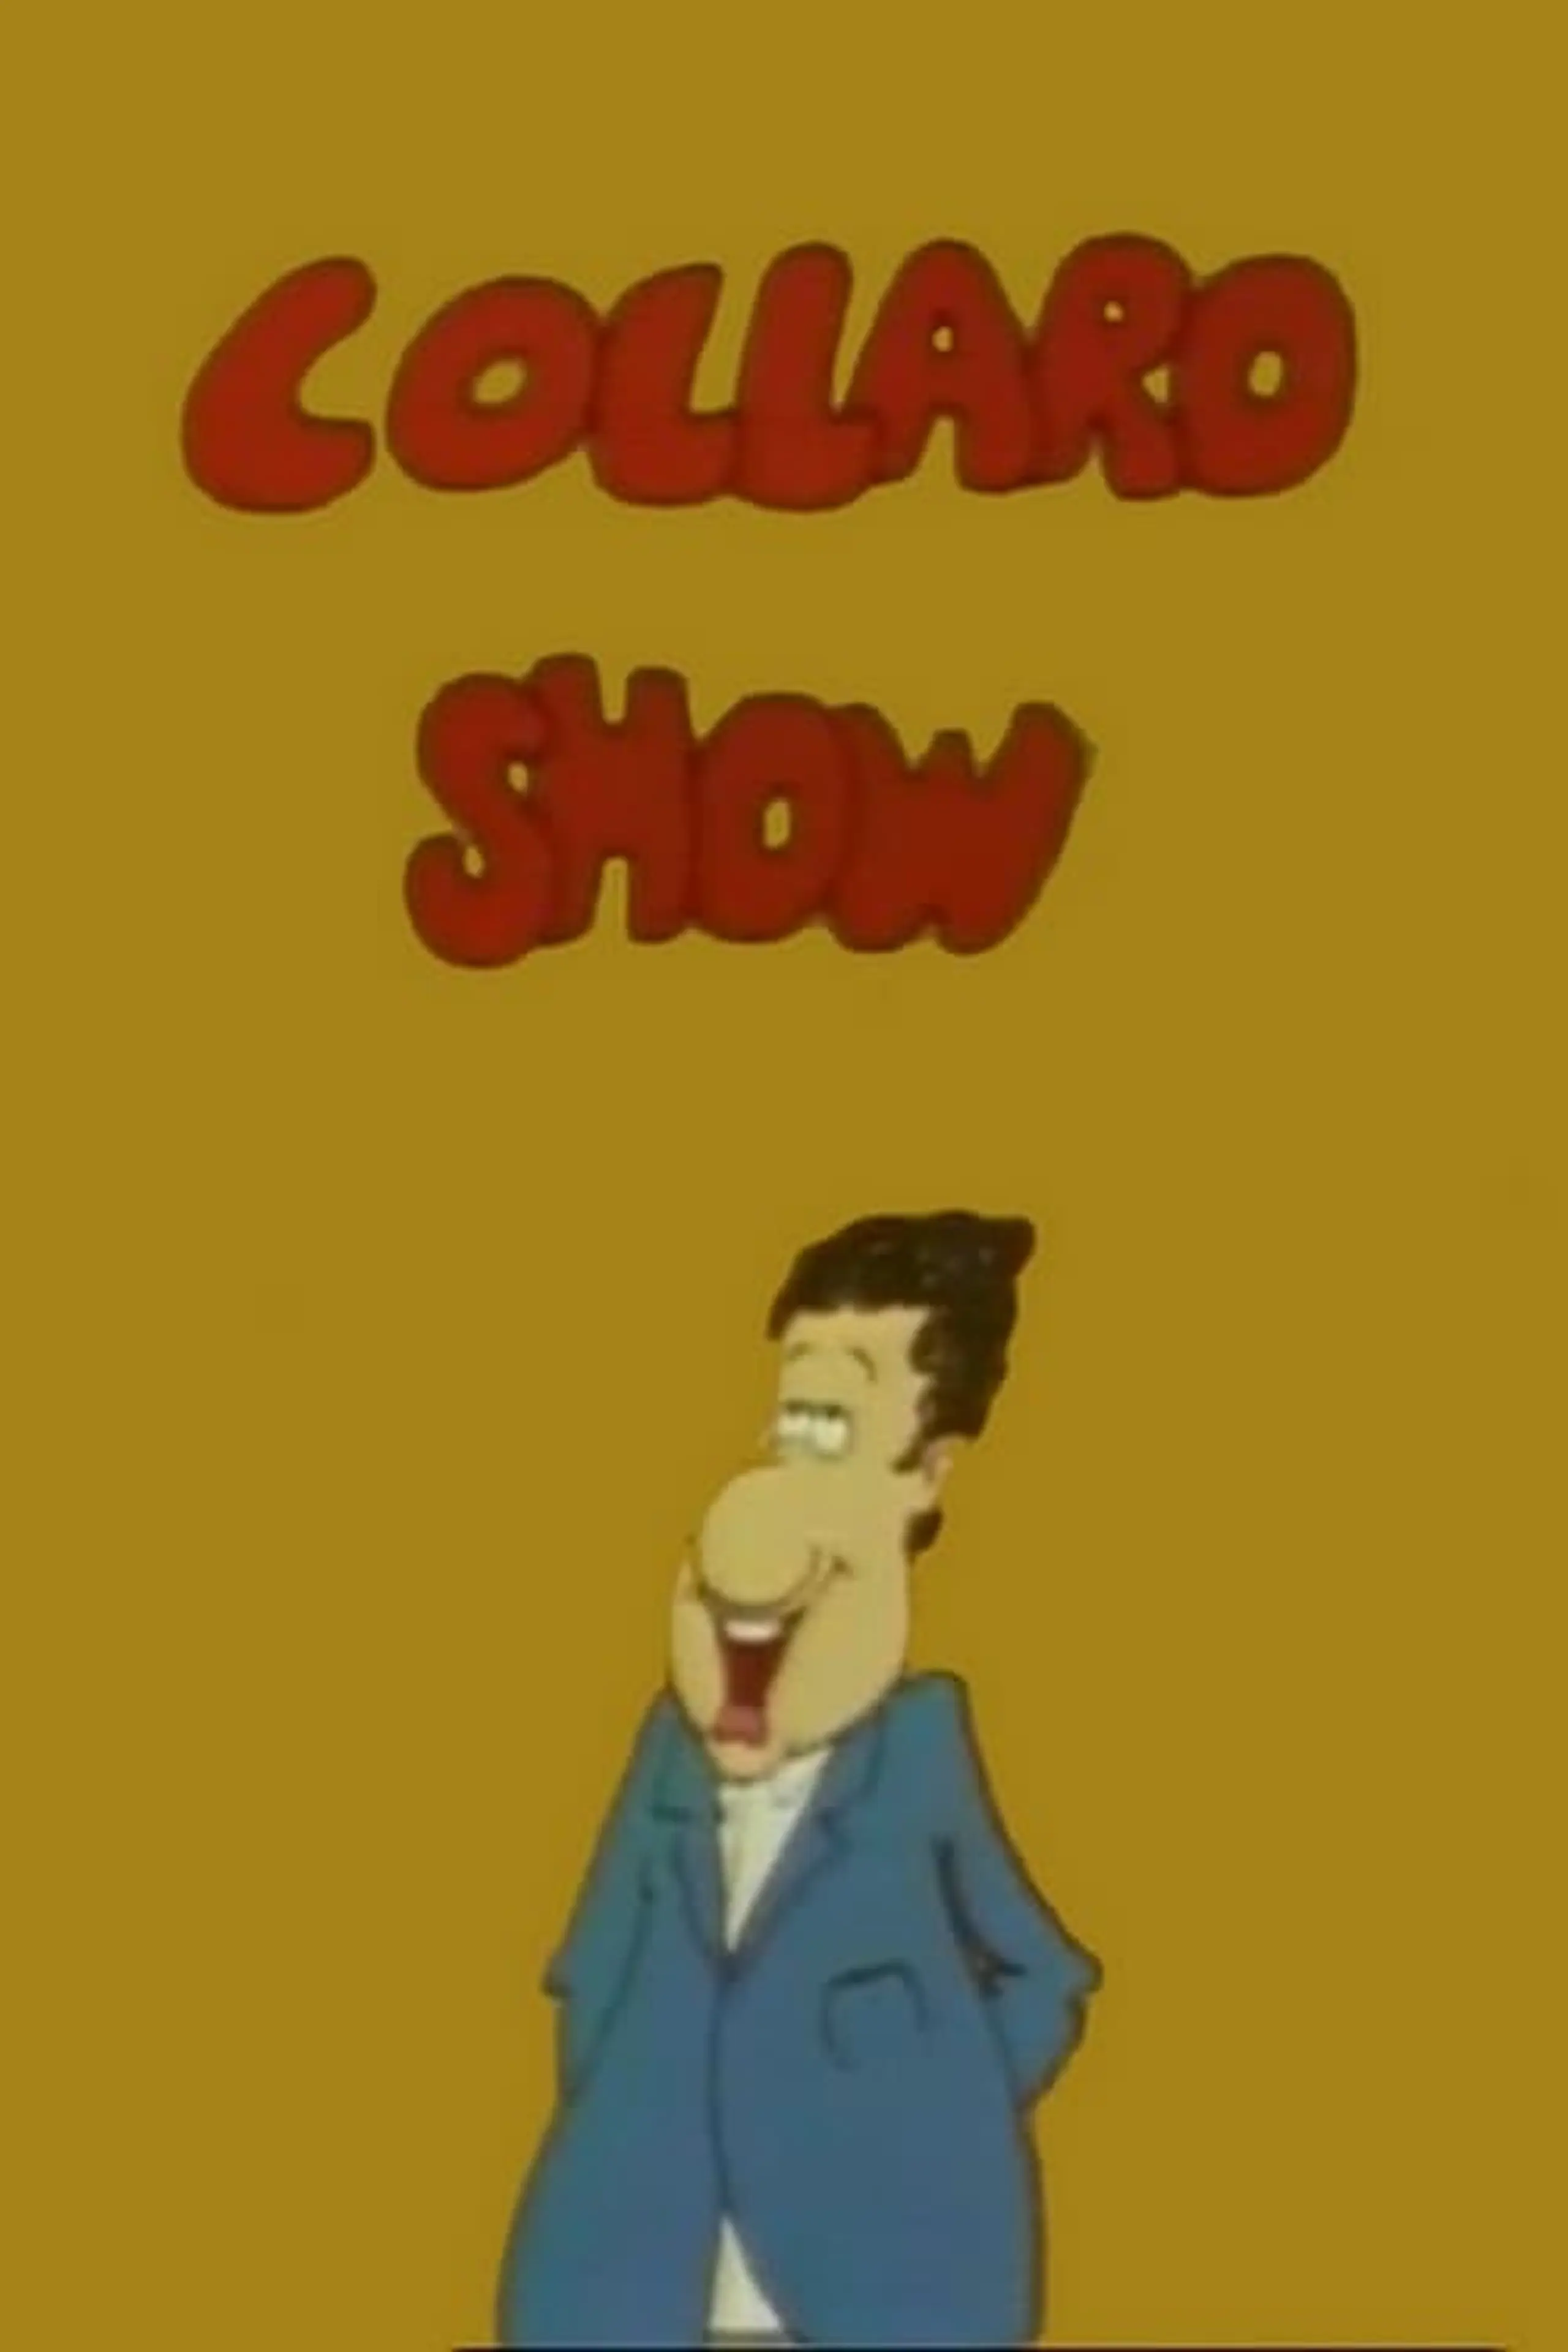 Collaro Show